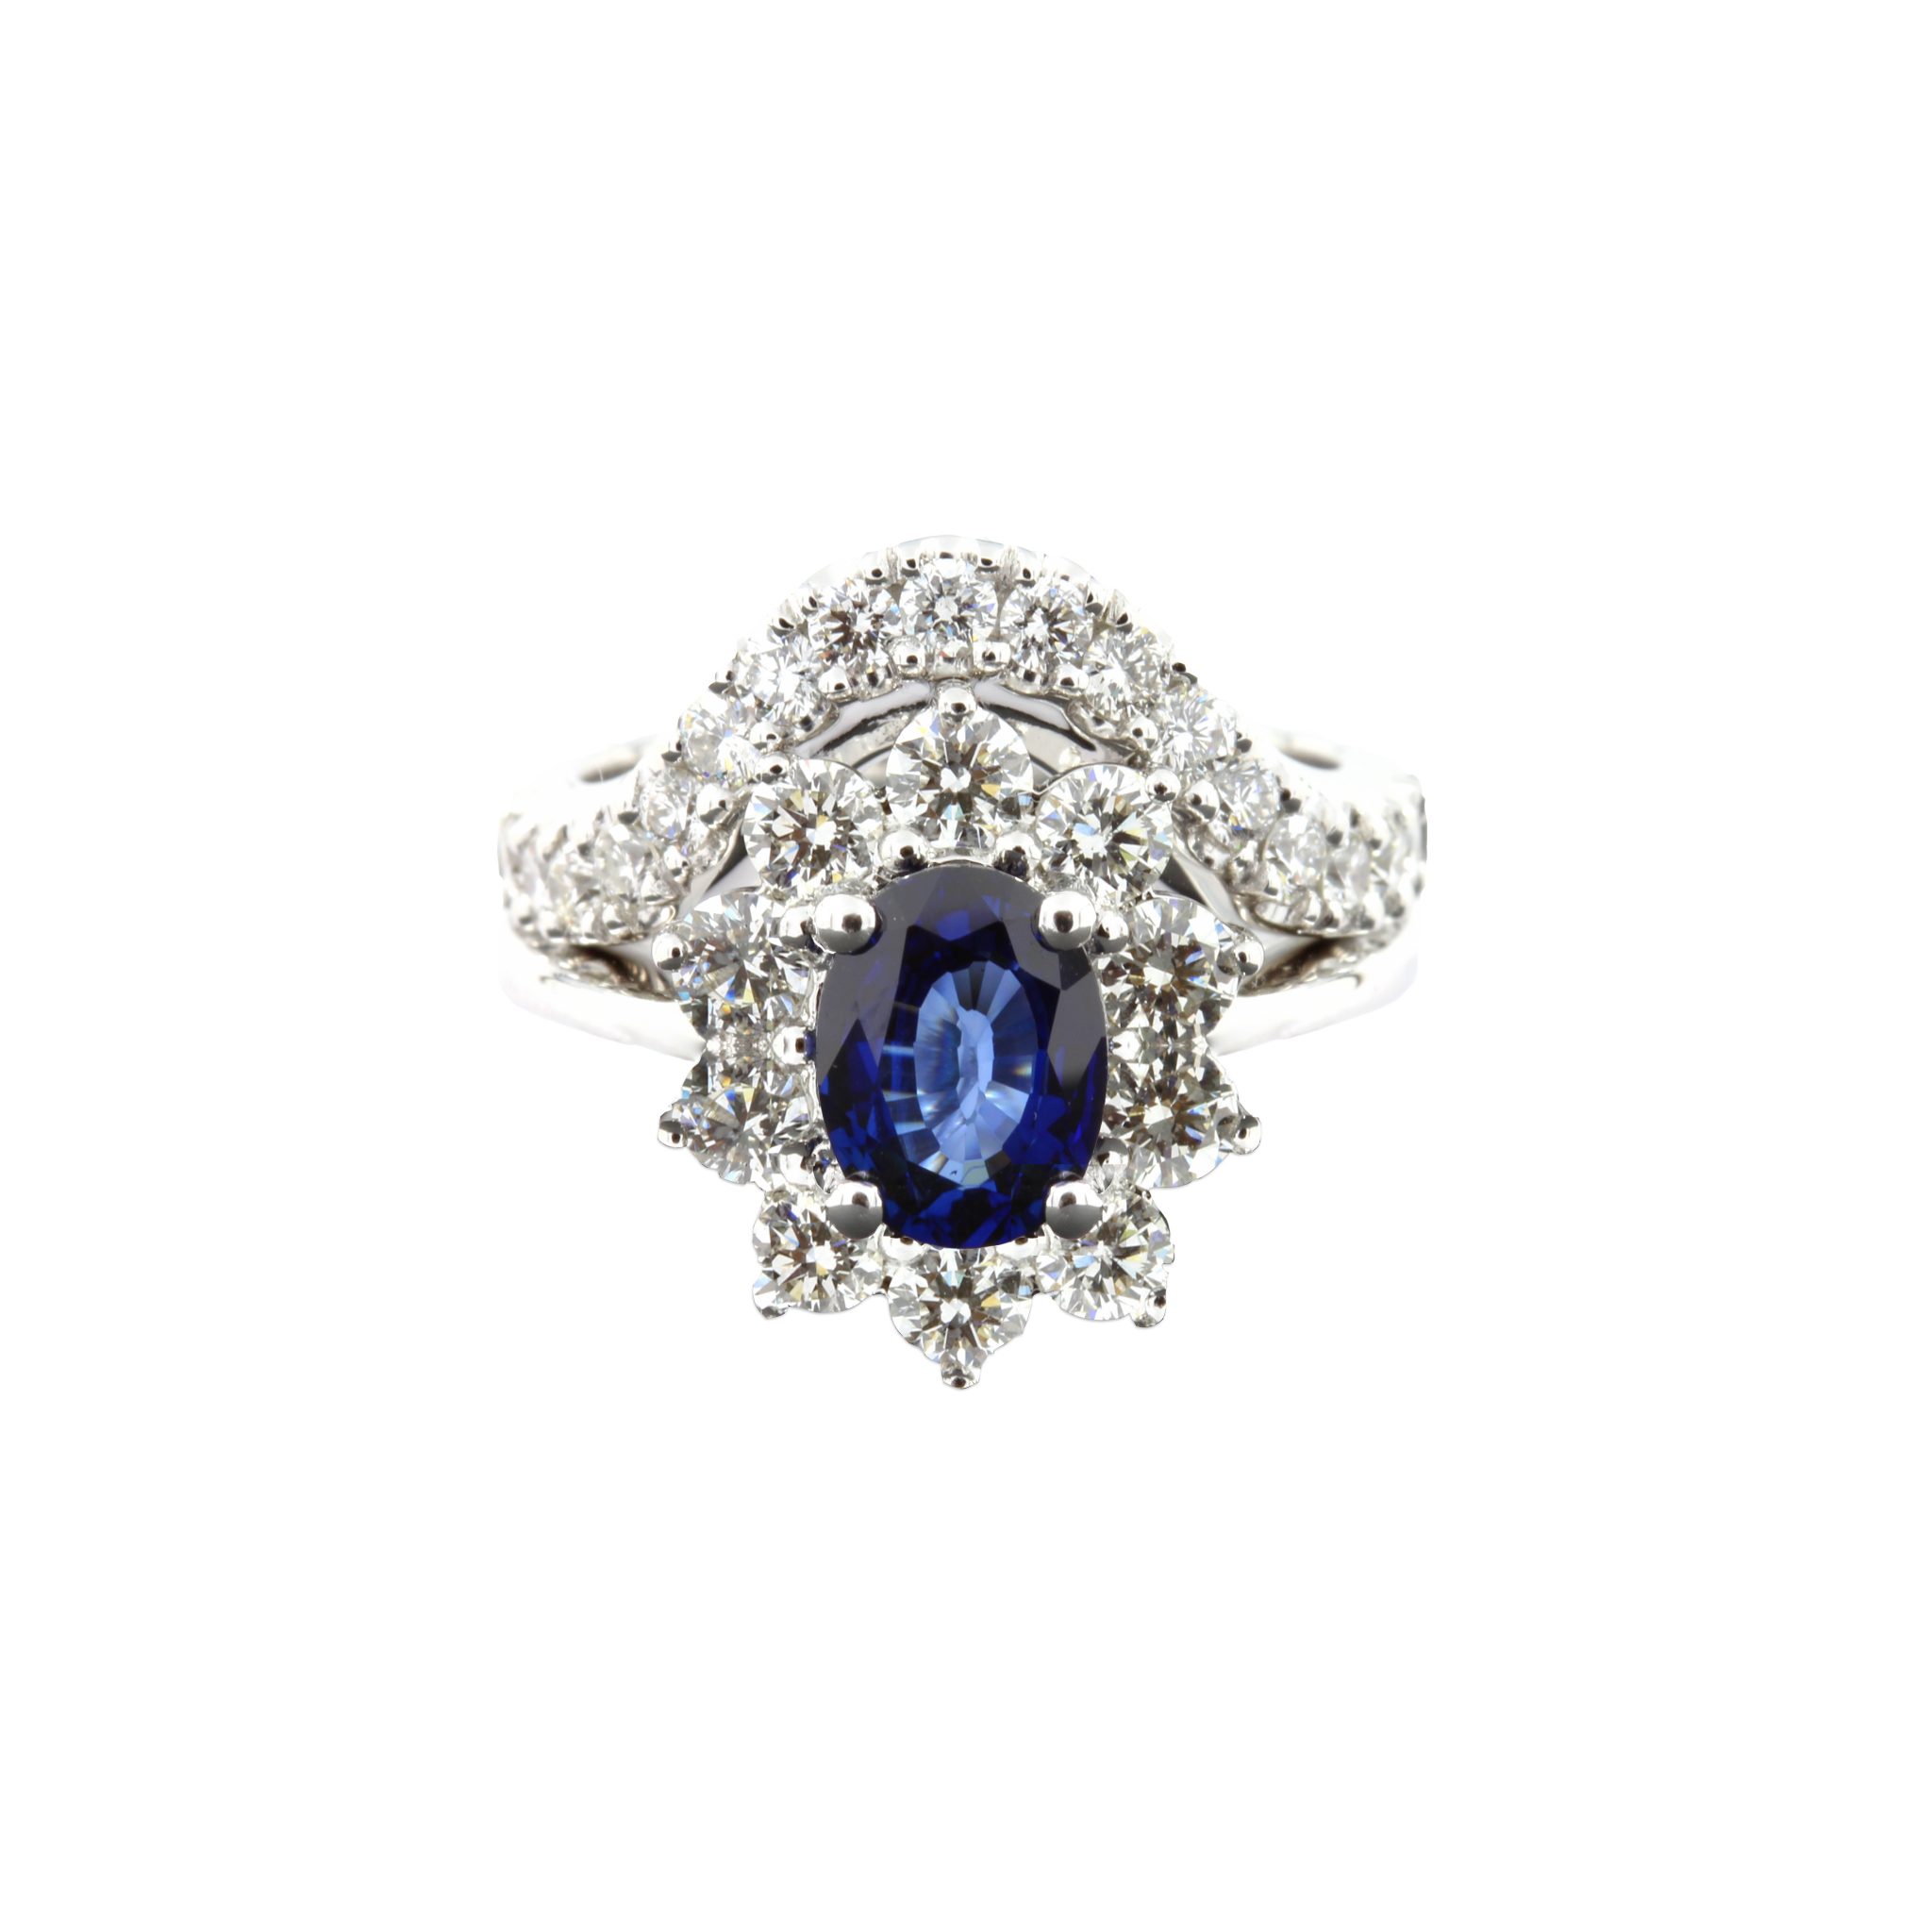 Elegant oval sapphire and diamond ring